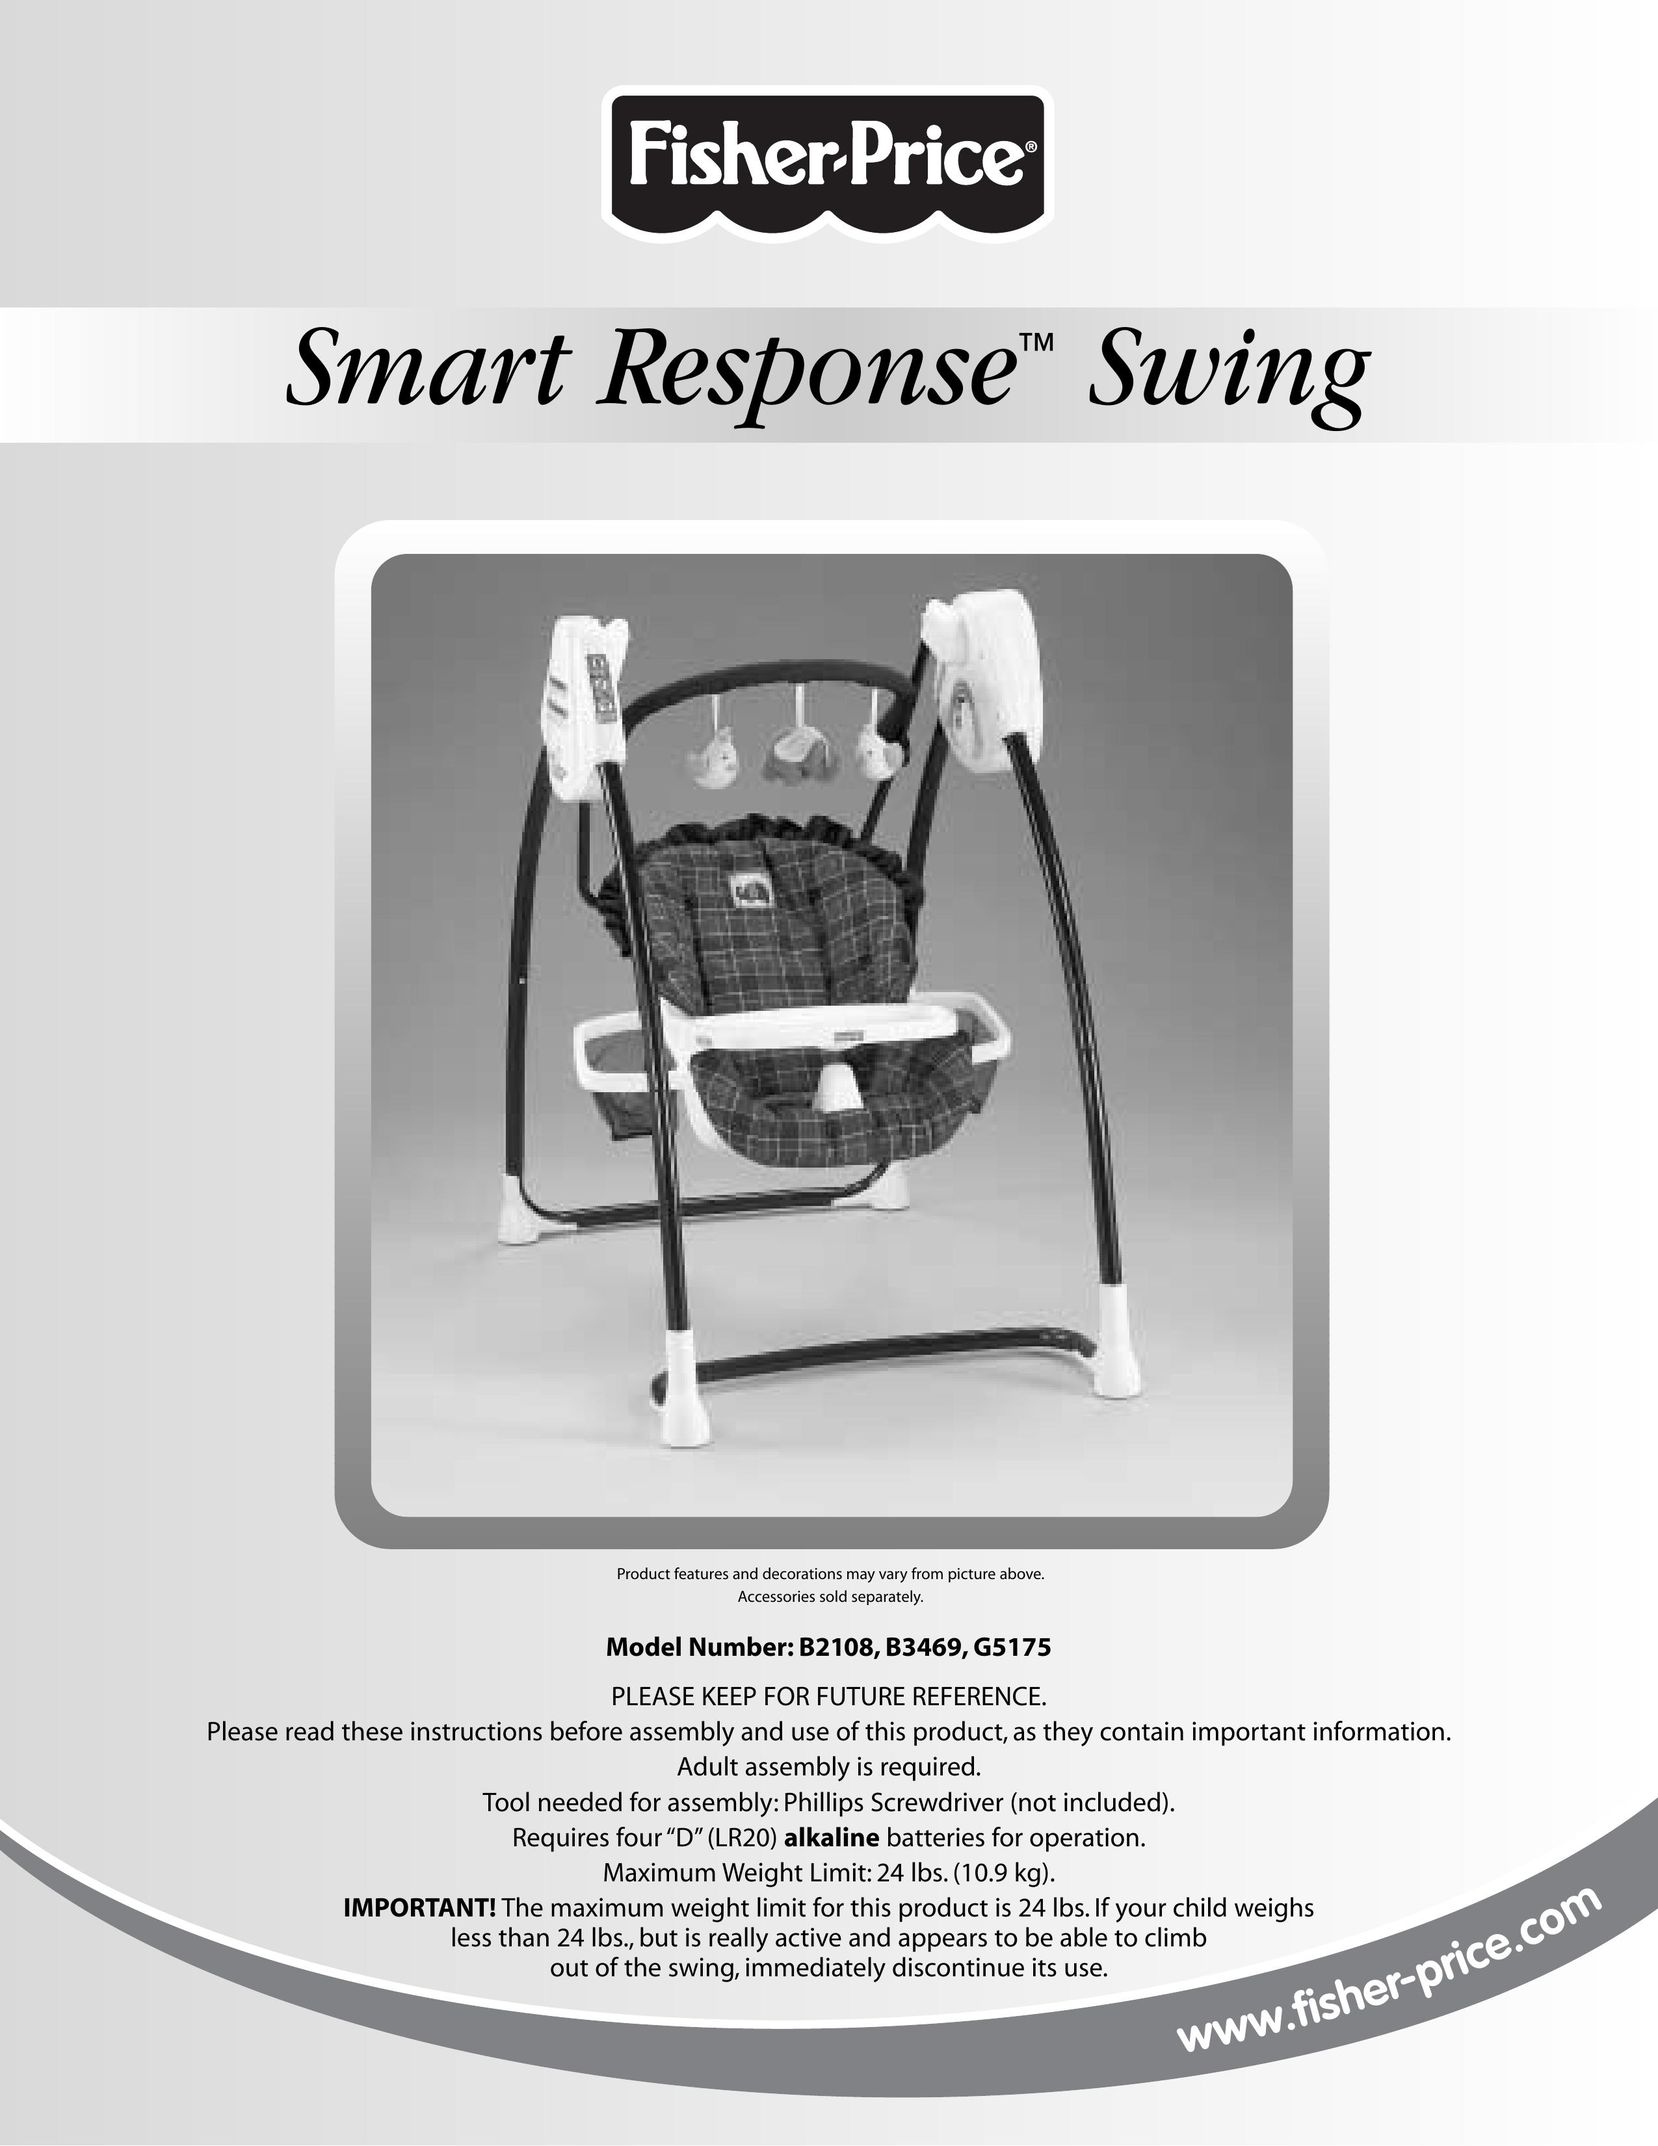 Fisher-Price G5175 Baby Swing User Manual